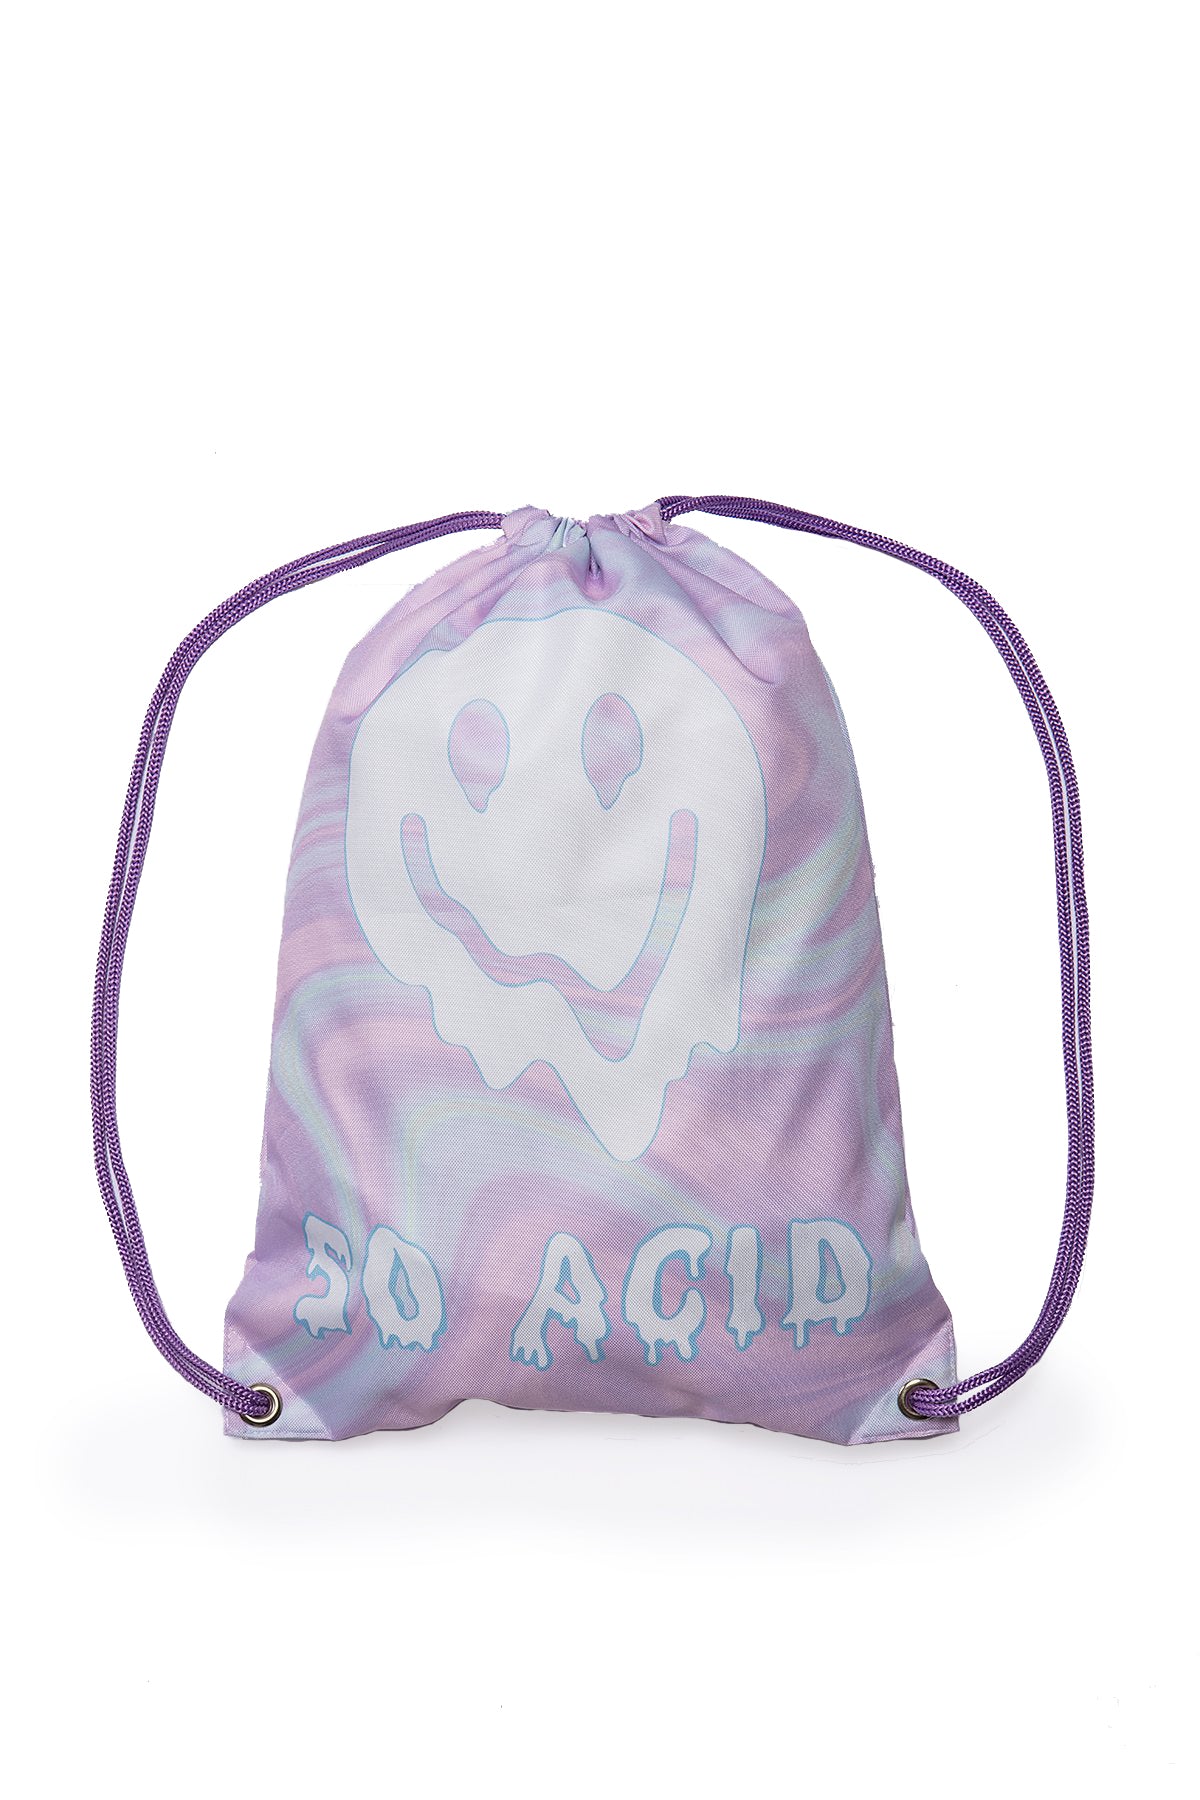 So Acid рюкзаки